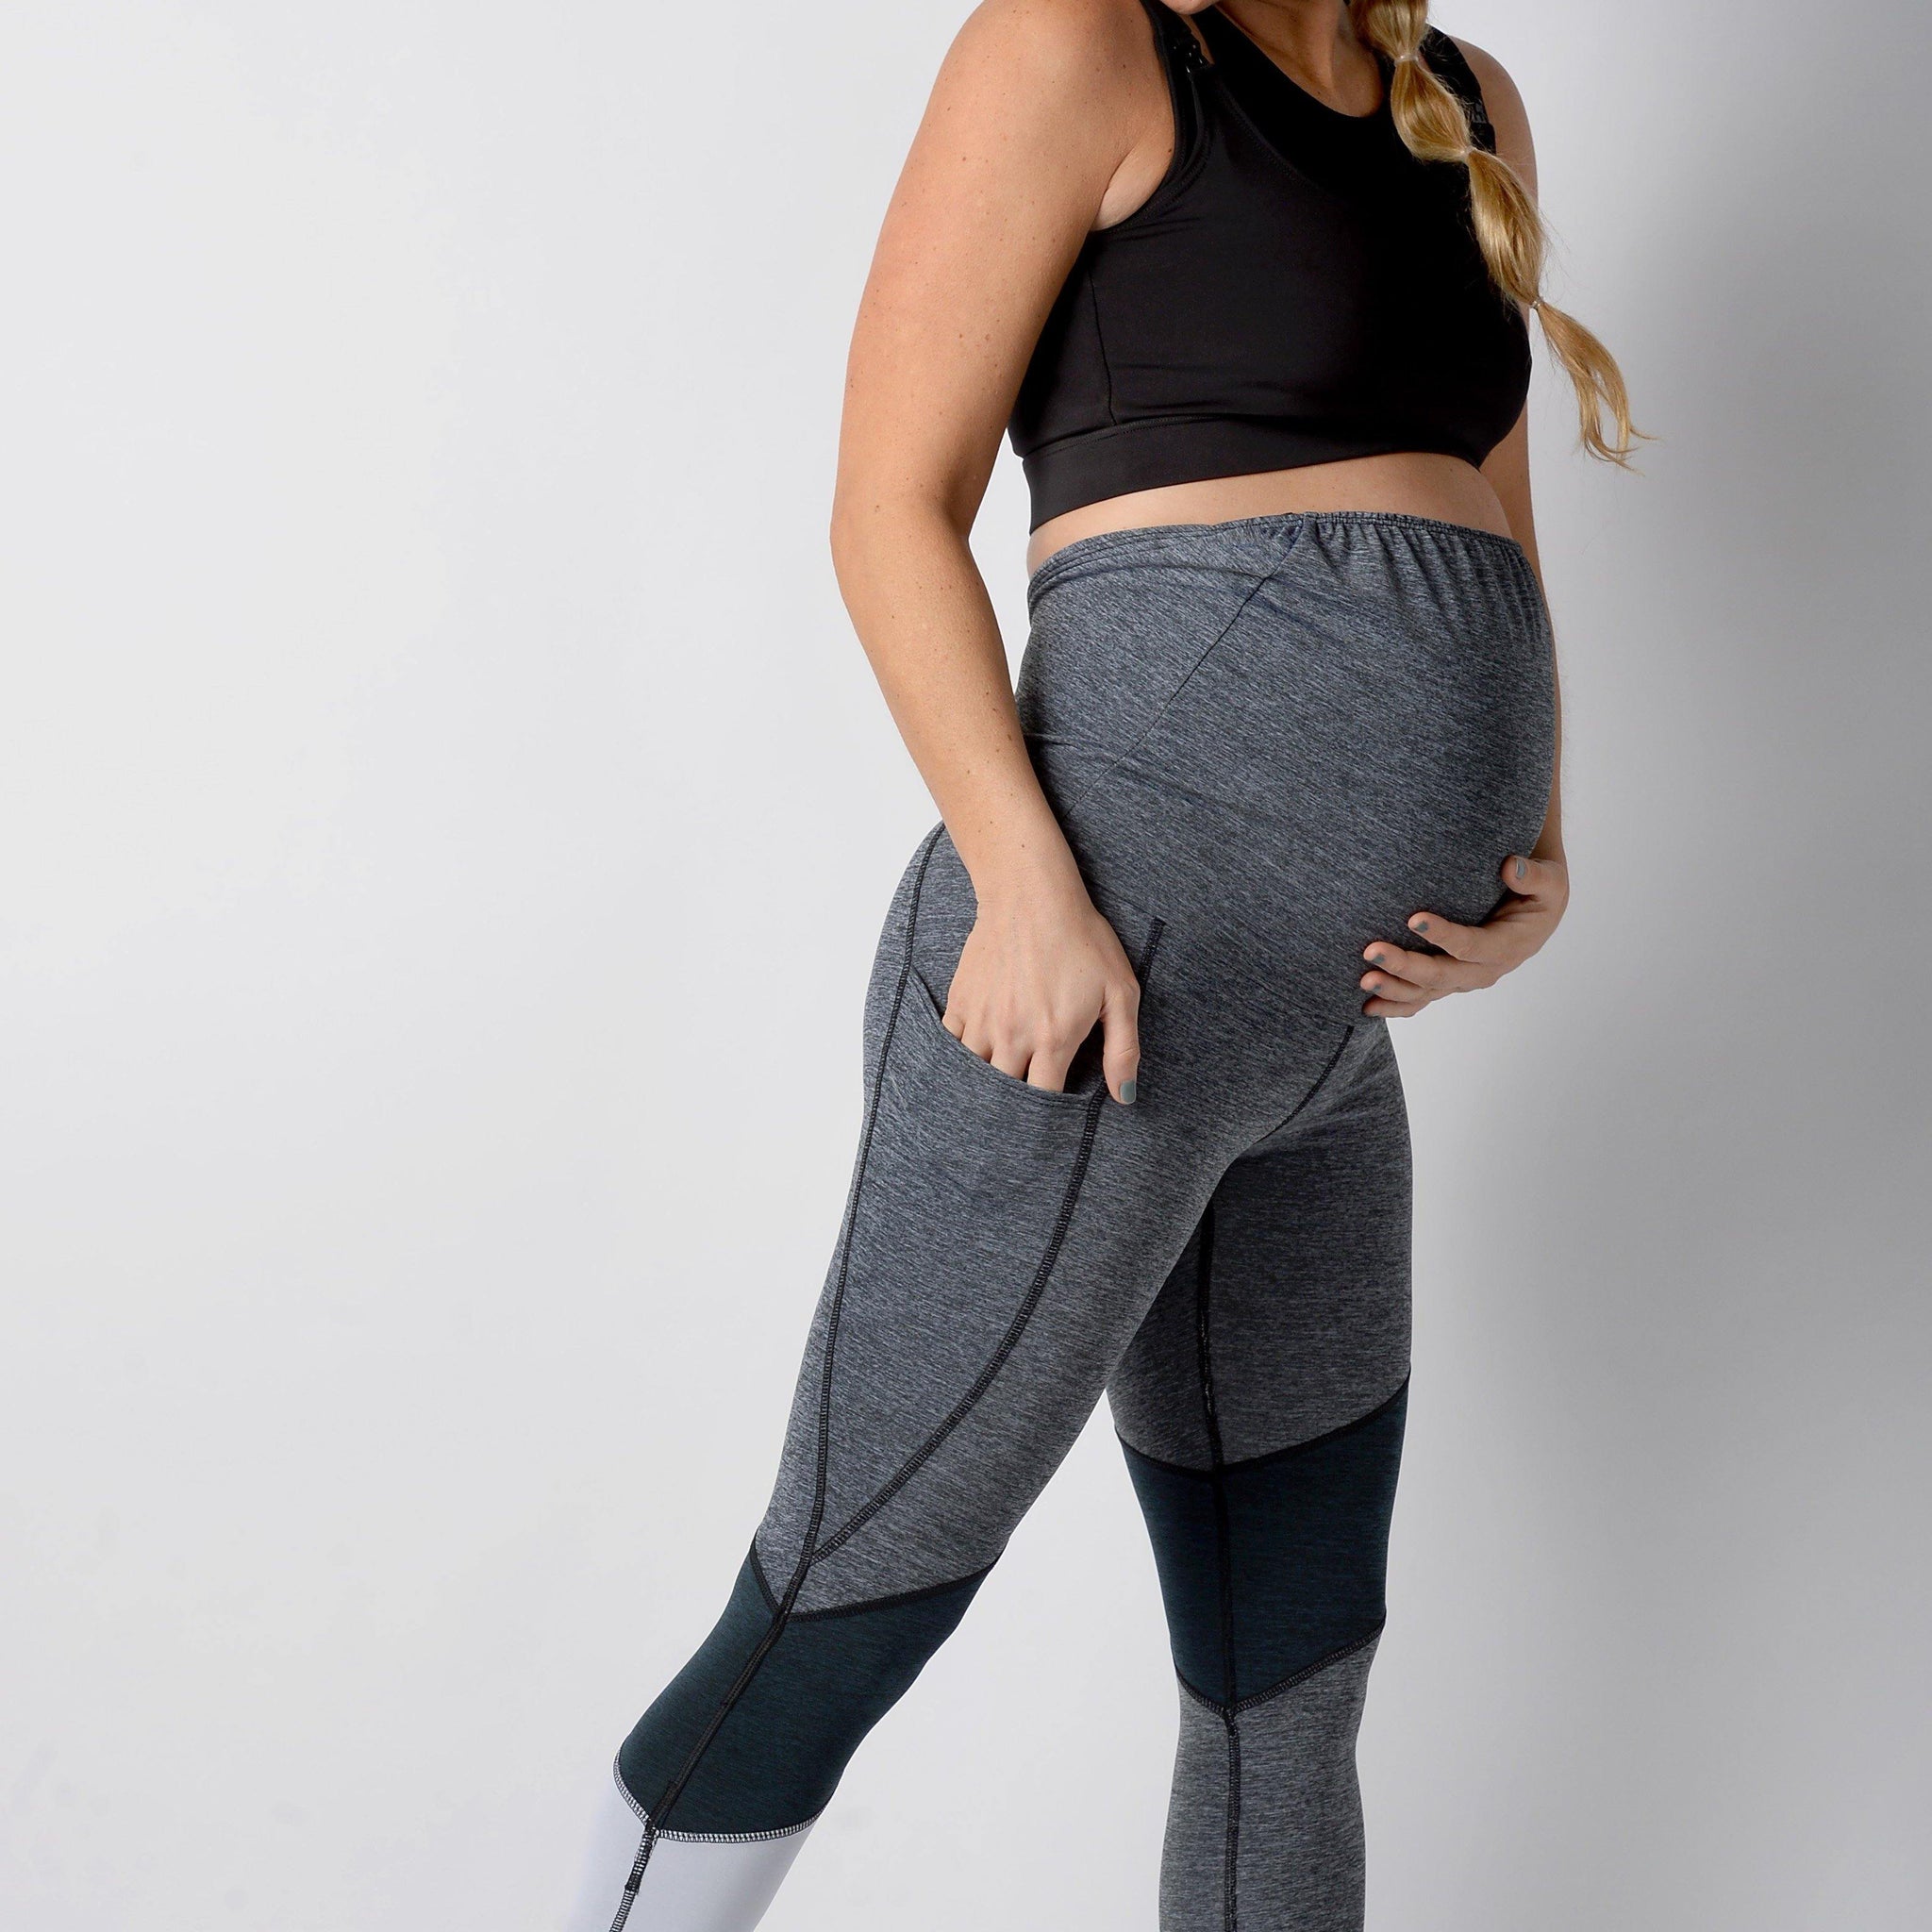 Kace Race Day Leggings Grey - duoFIT Maternity Activewear